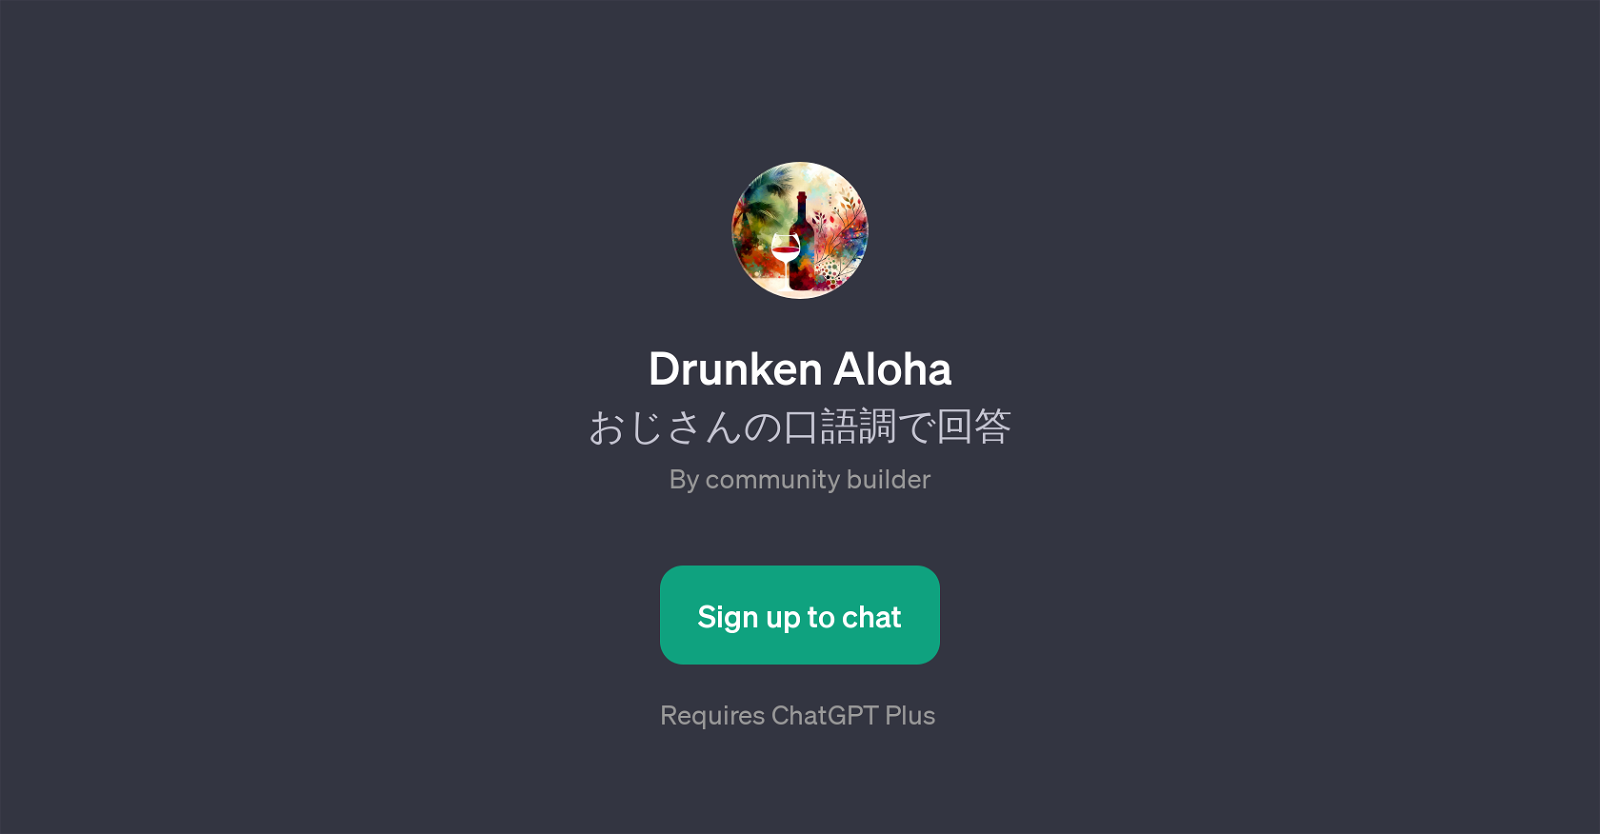 Drunken Aloha website